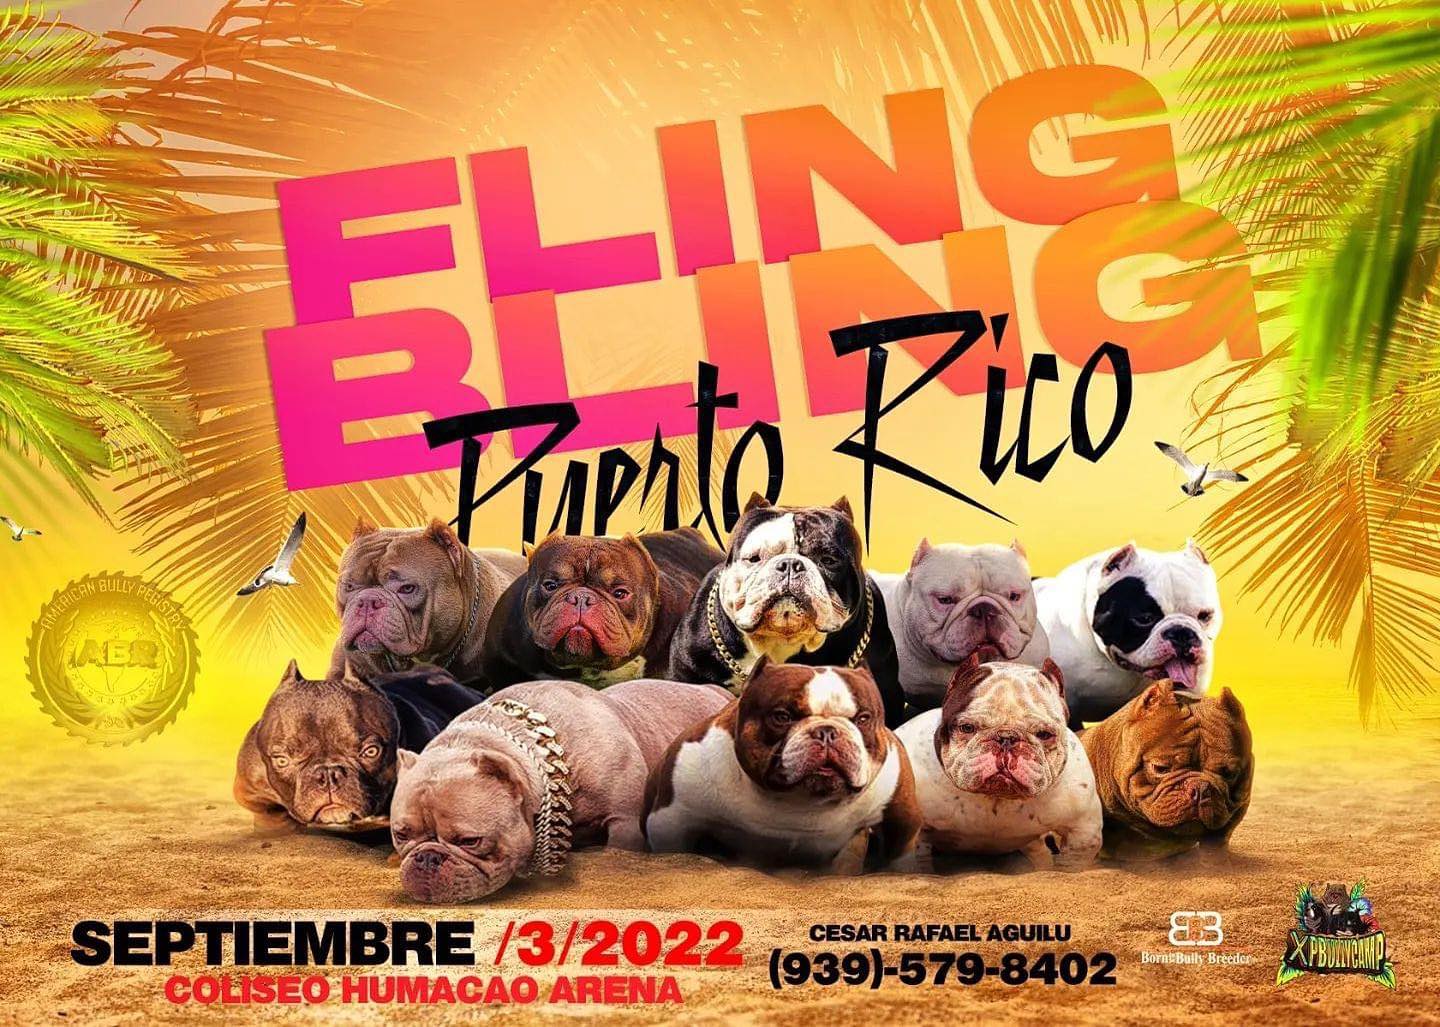 Fling Bling Puerto Rico - Sep 3rd 2022